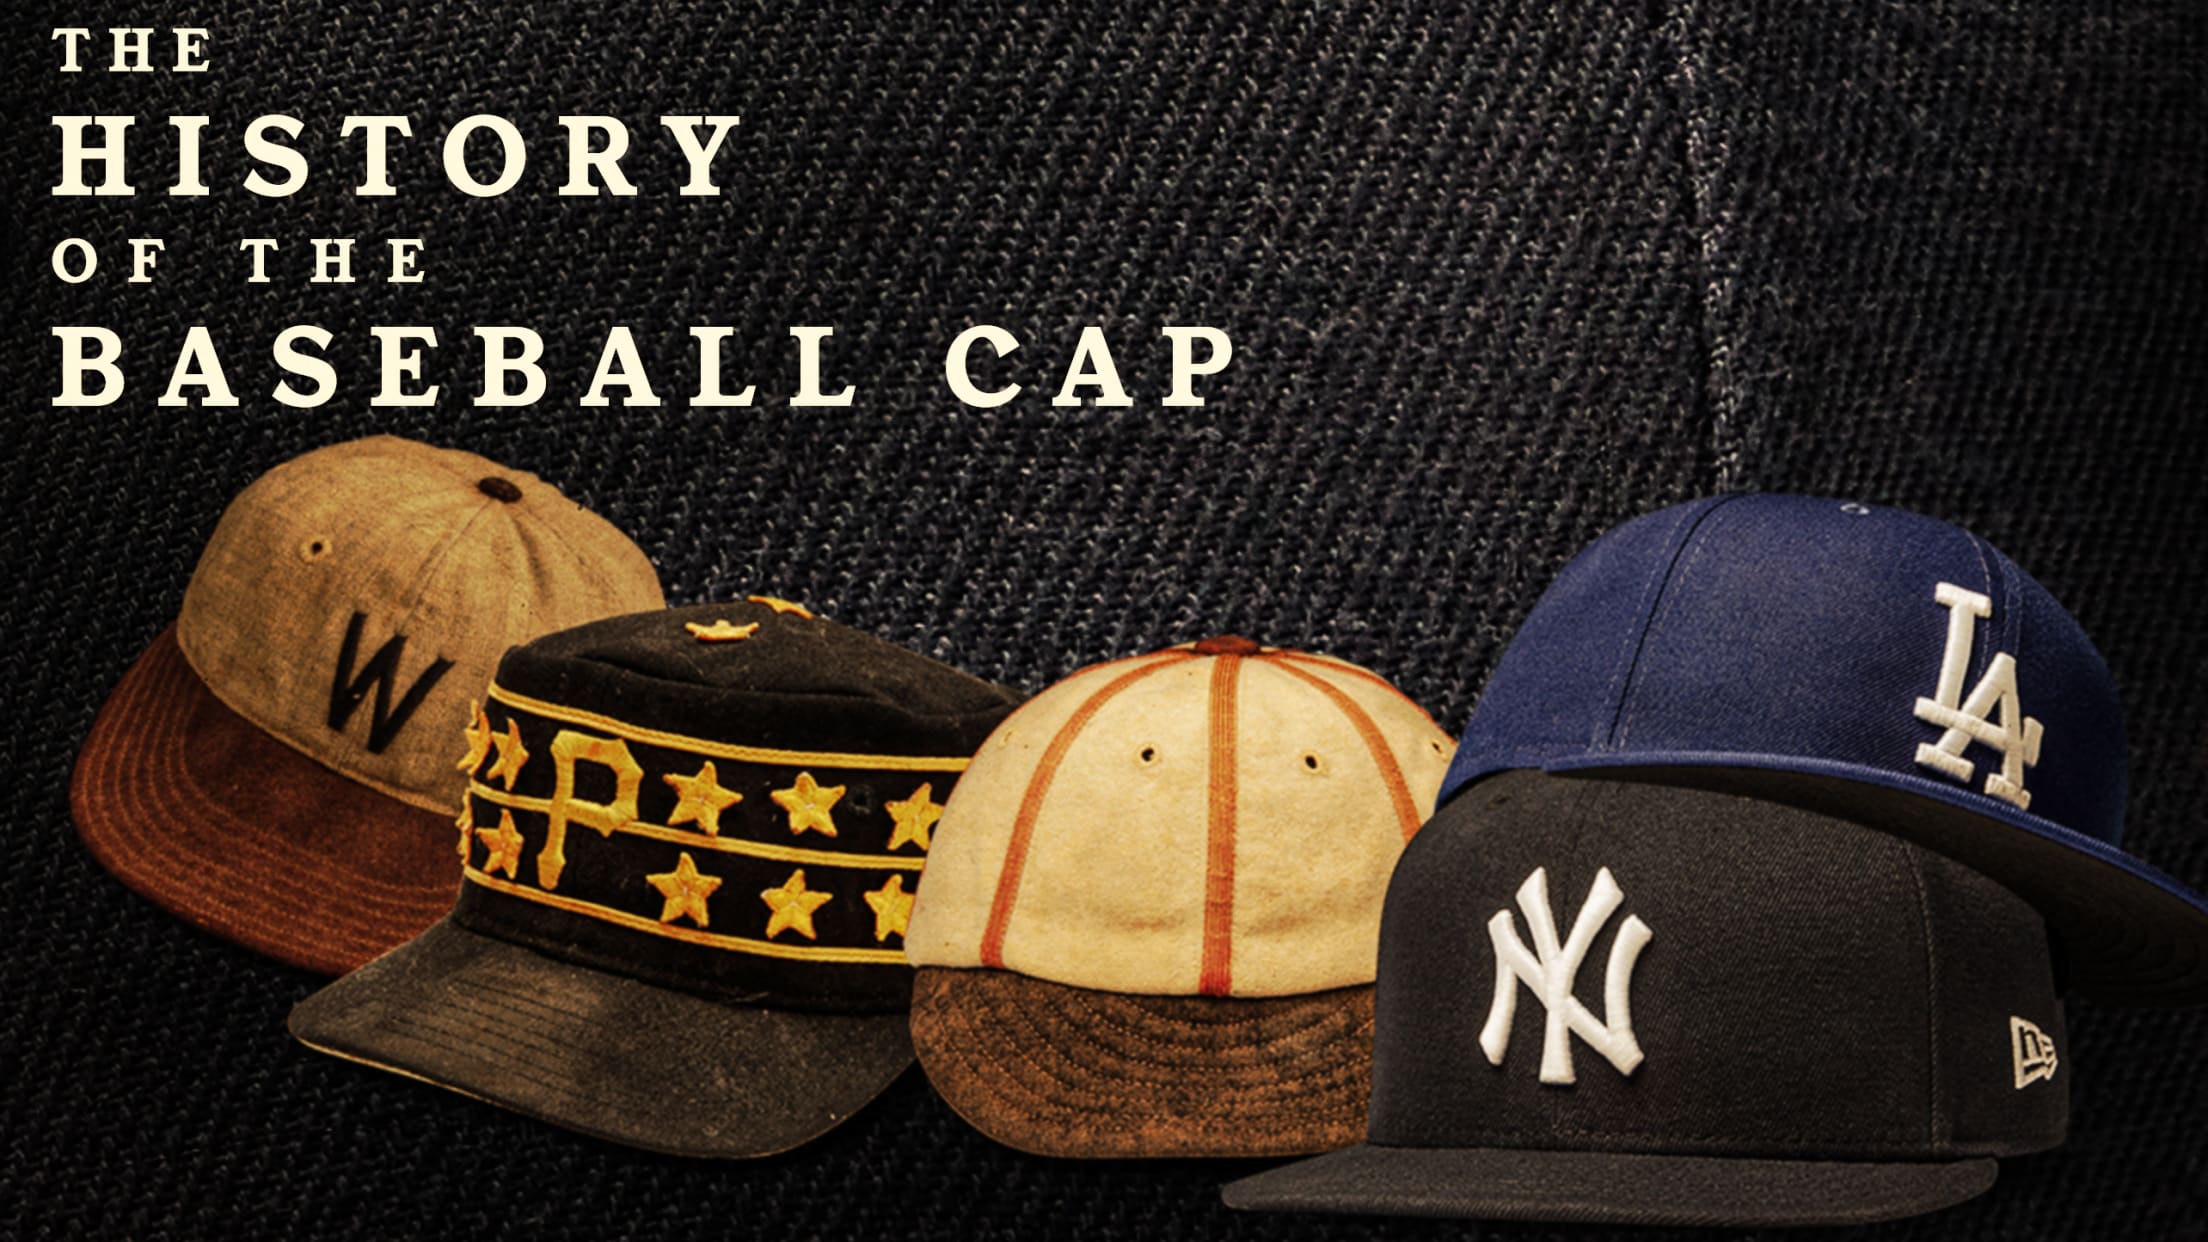 Baseball cap history and timeline | MLB.com